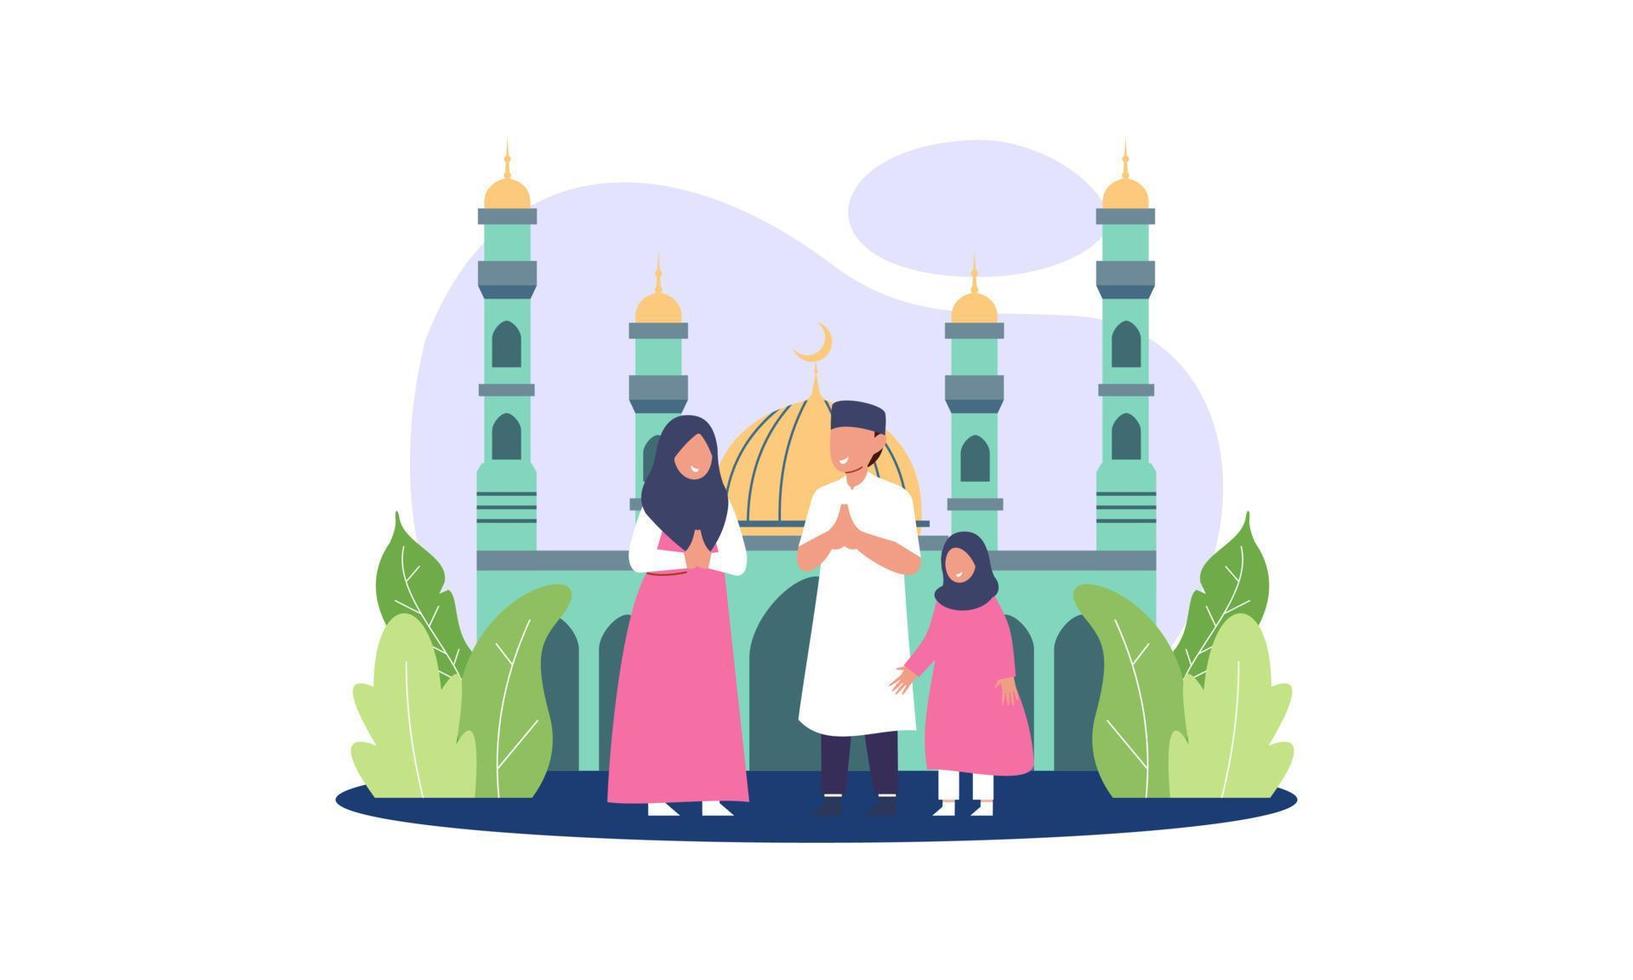 Happy eid mubarak, ramadan mubarak greeting concept with people character illustration vector